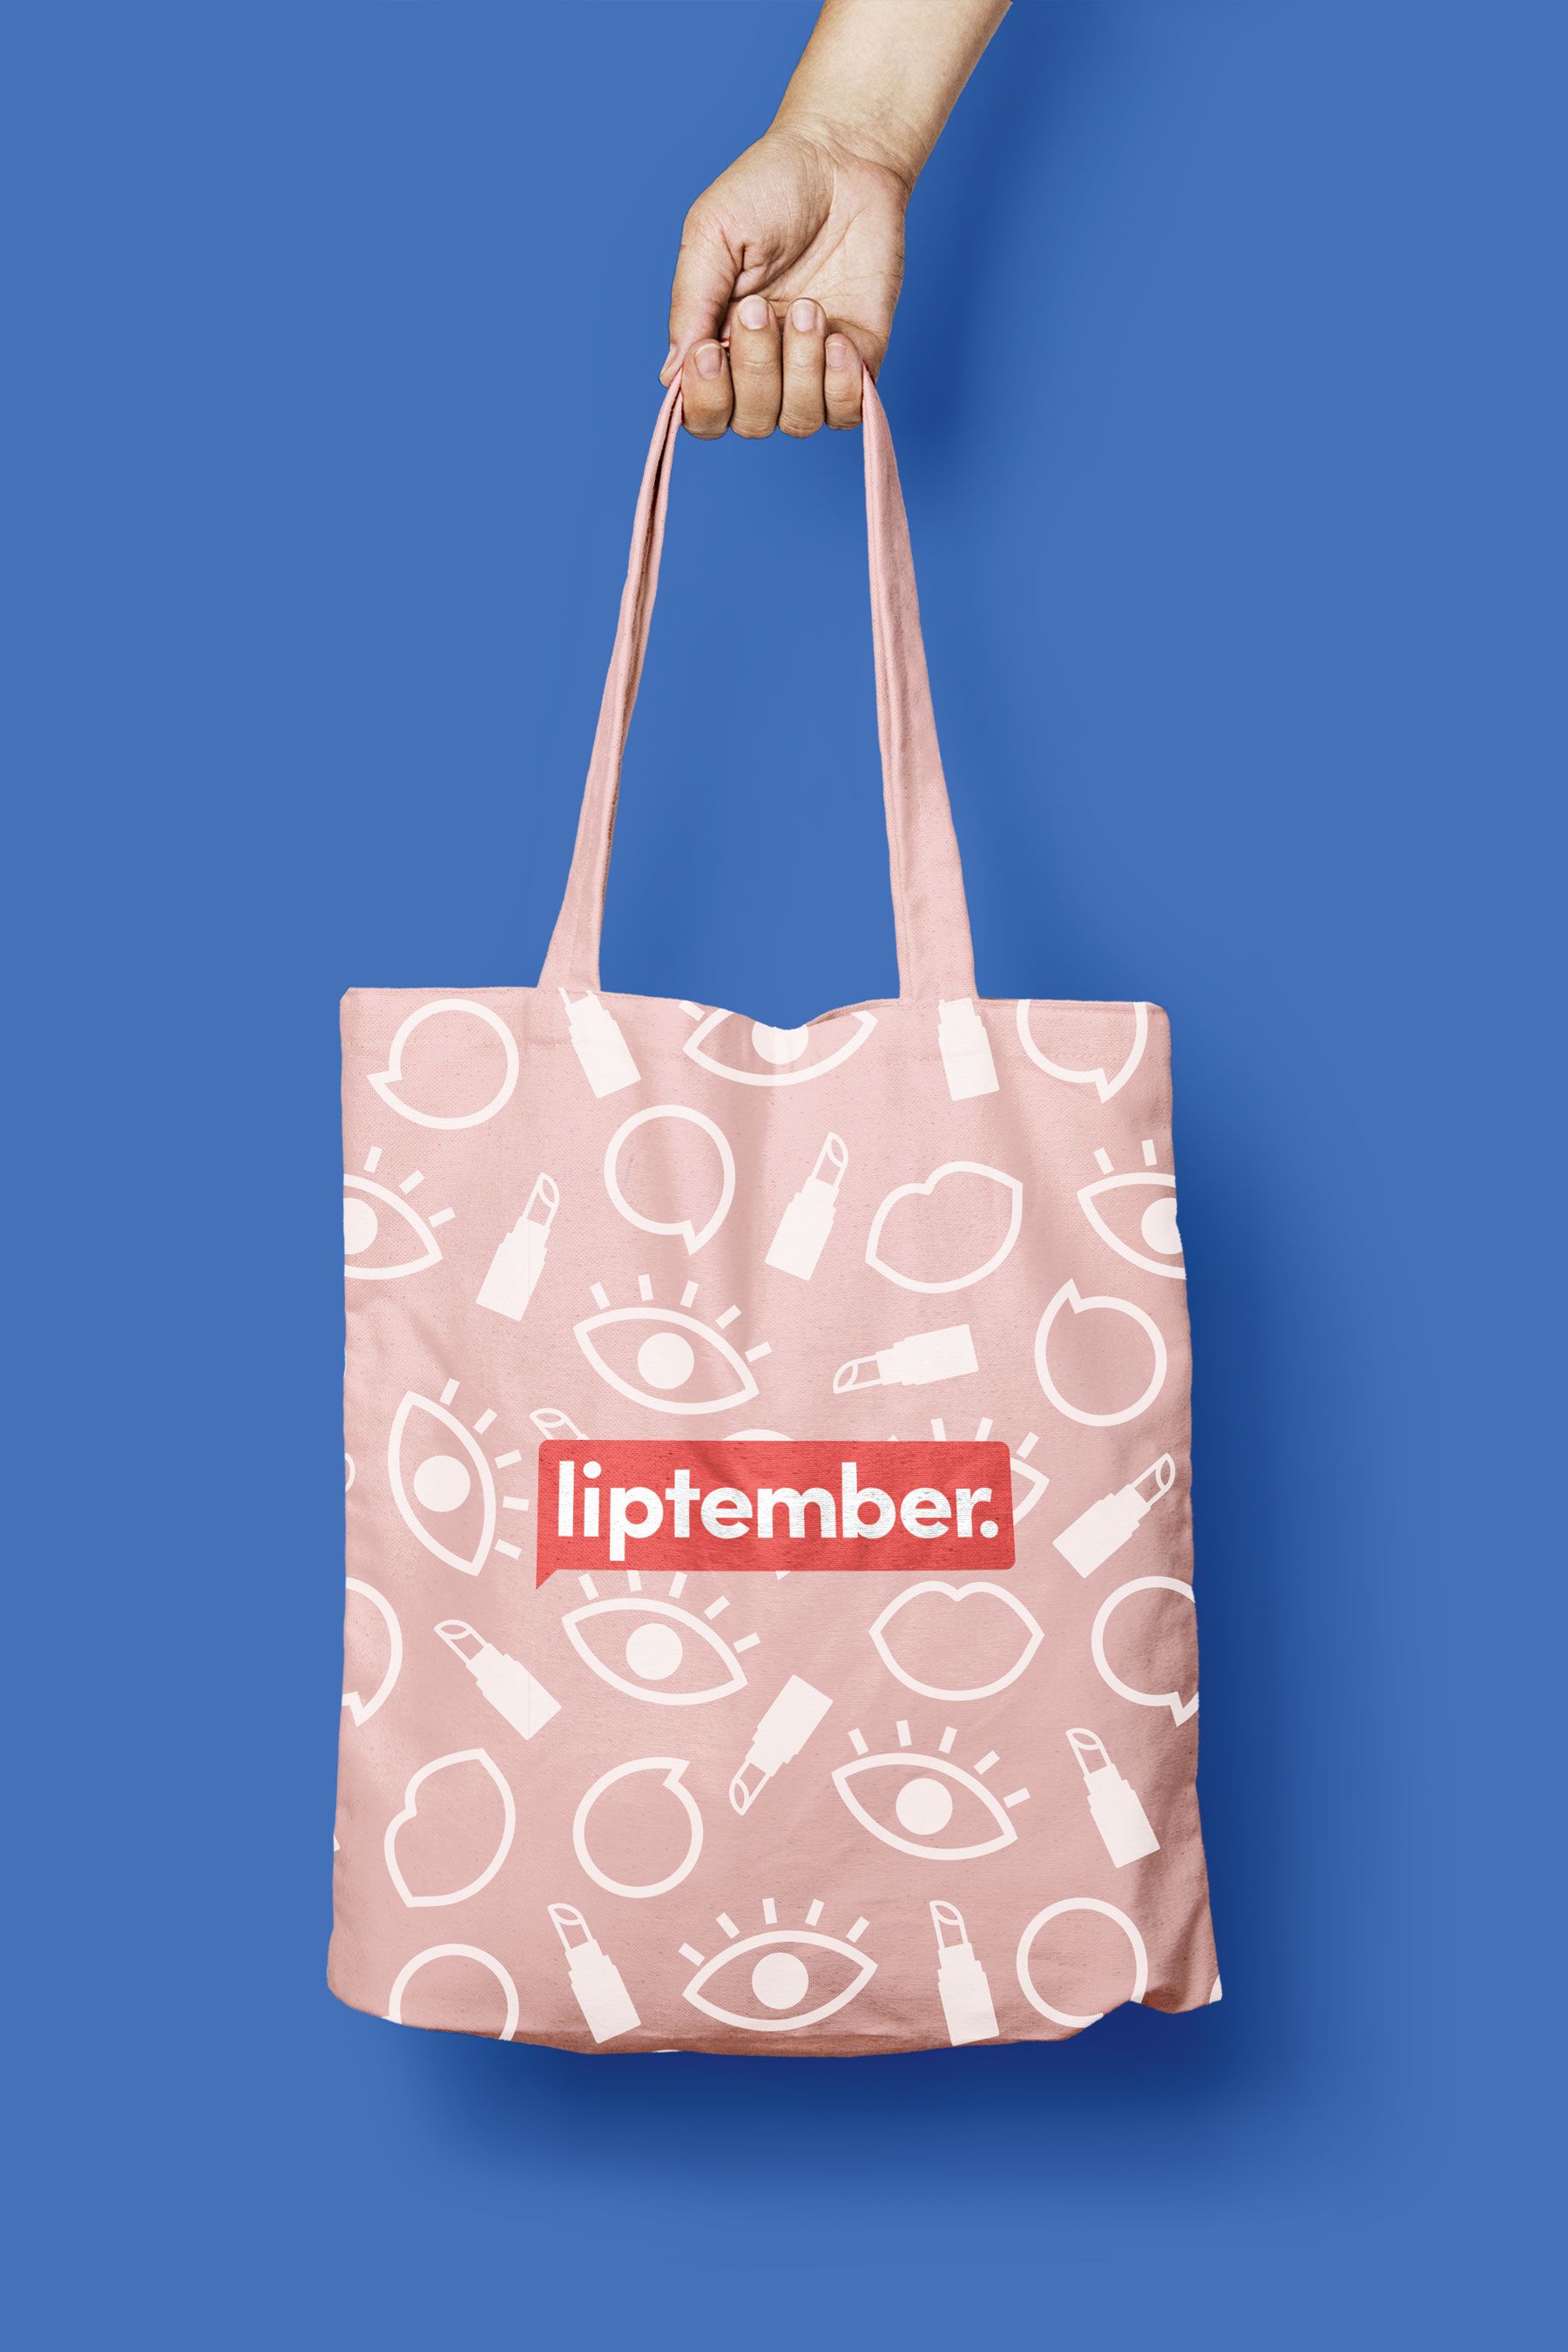 Liptember Date Of Birth Design Branding